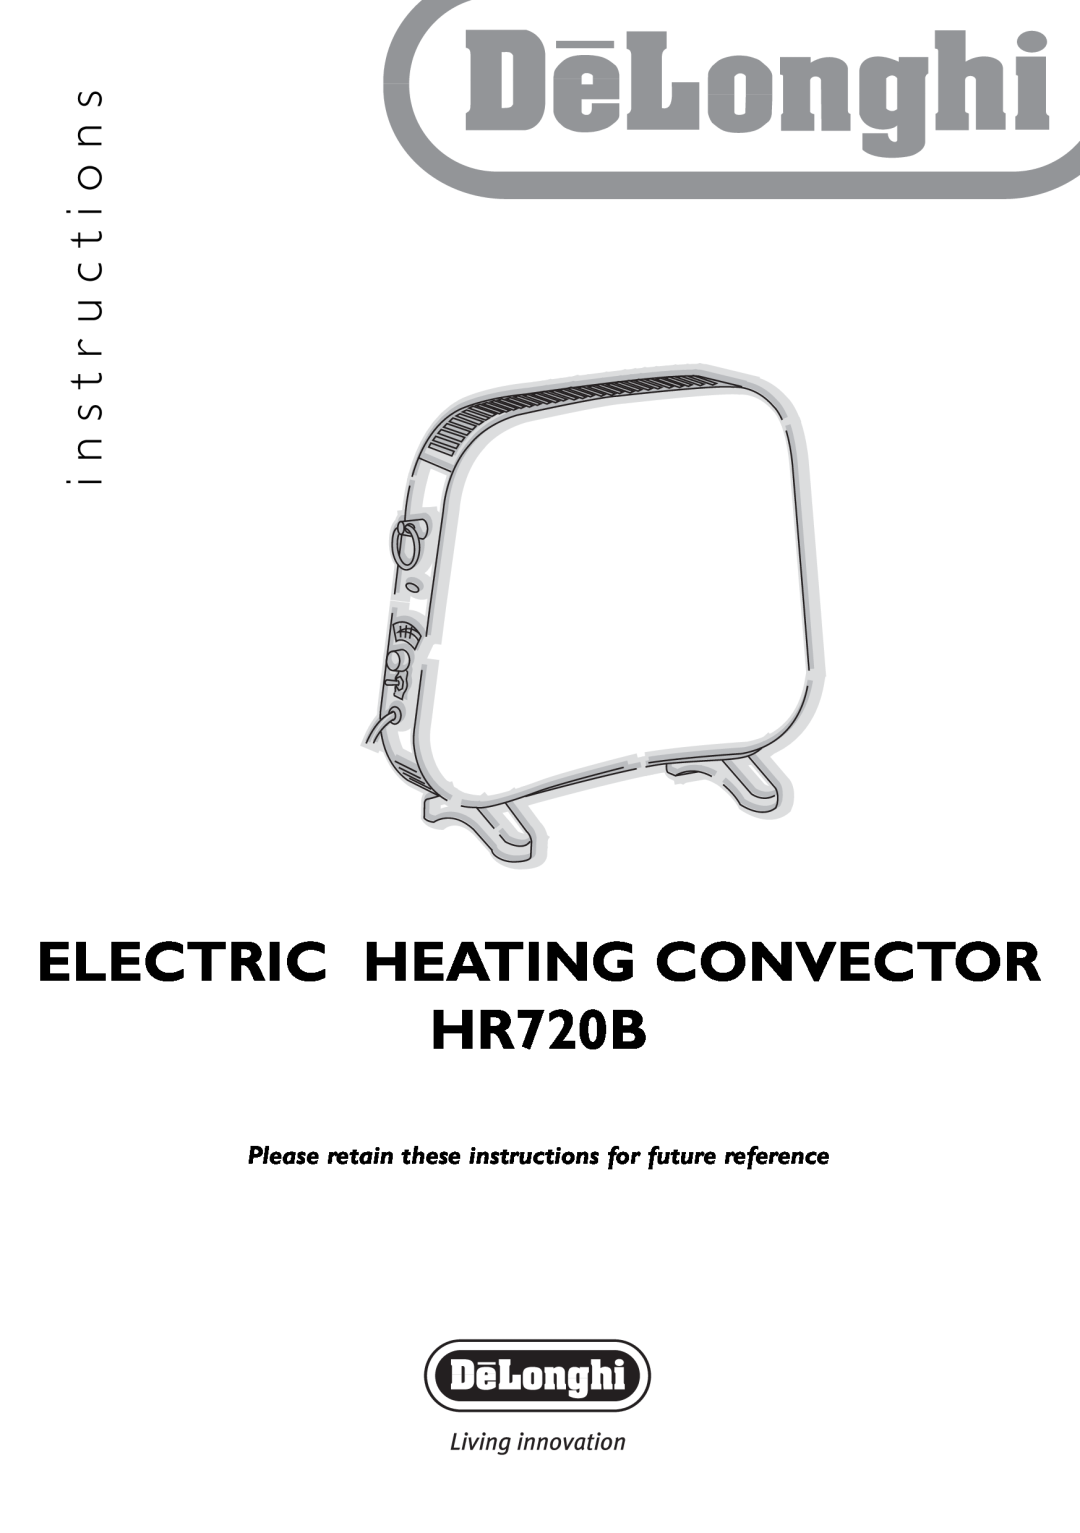 DeLonghi manual ELECTRIC HEATING CONVECTOR HR720B, i n s t r u c t i o n s 